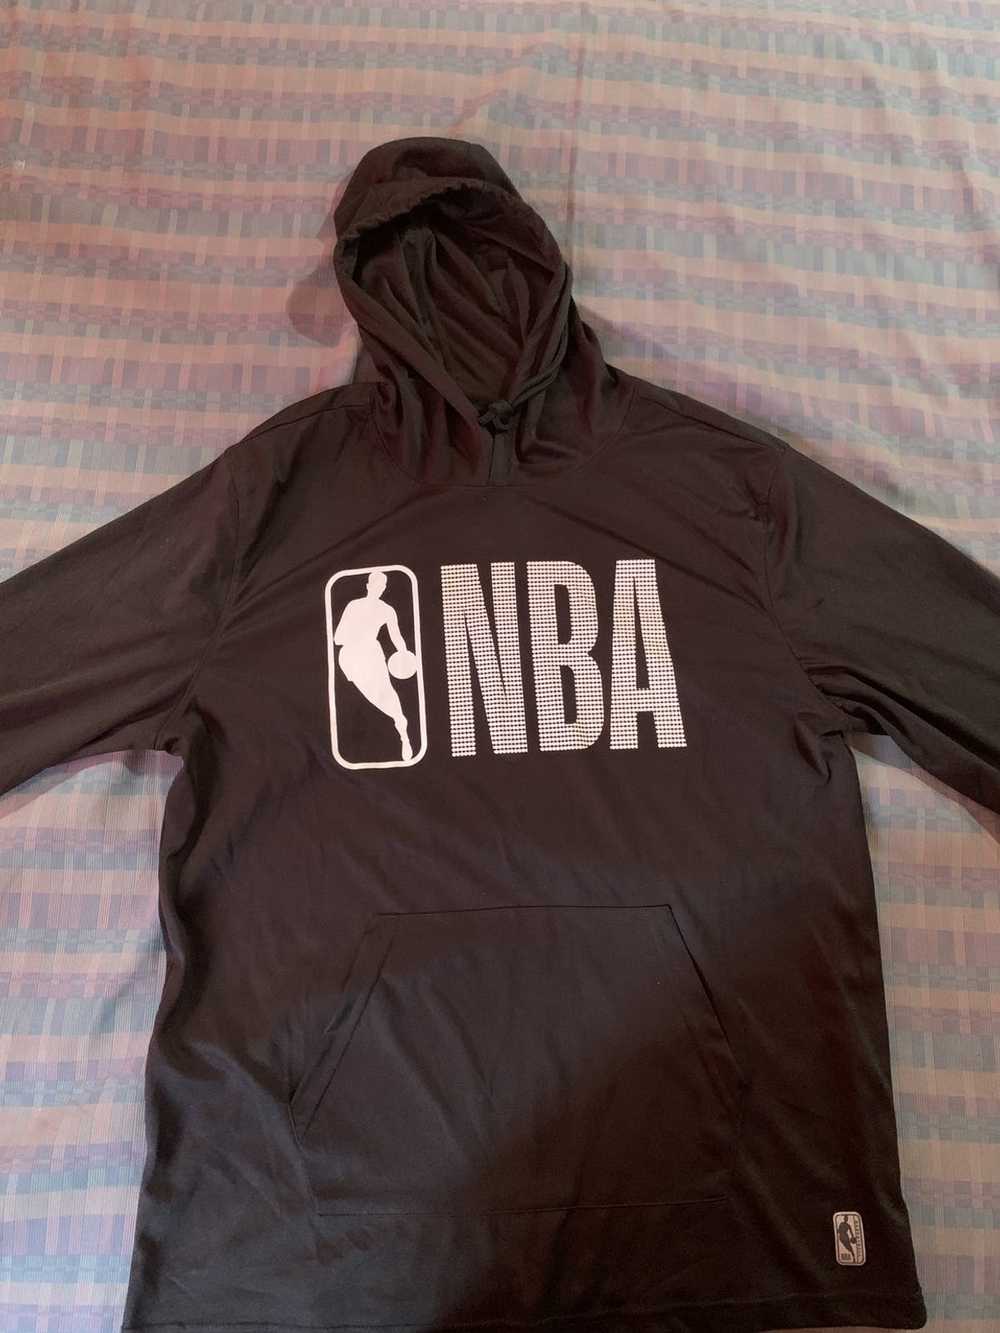 NBA NBA hoodie - image 1